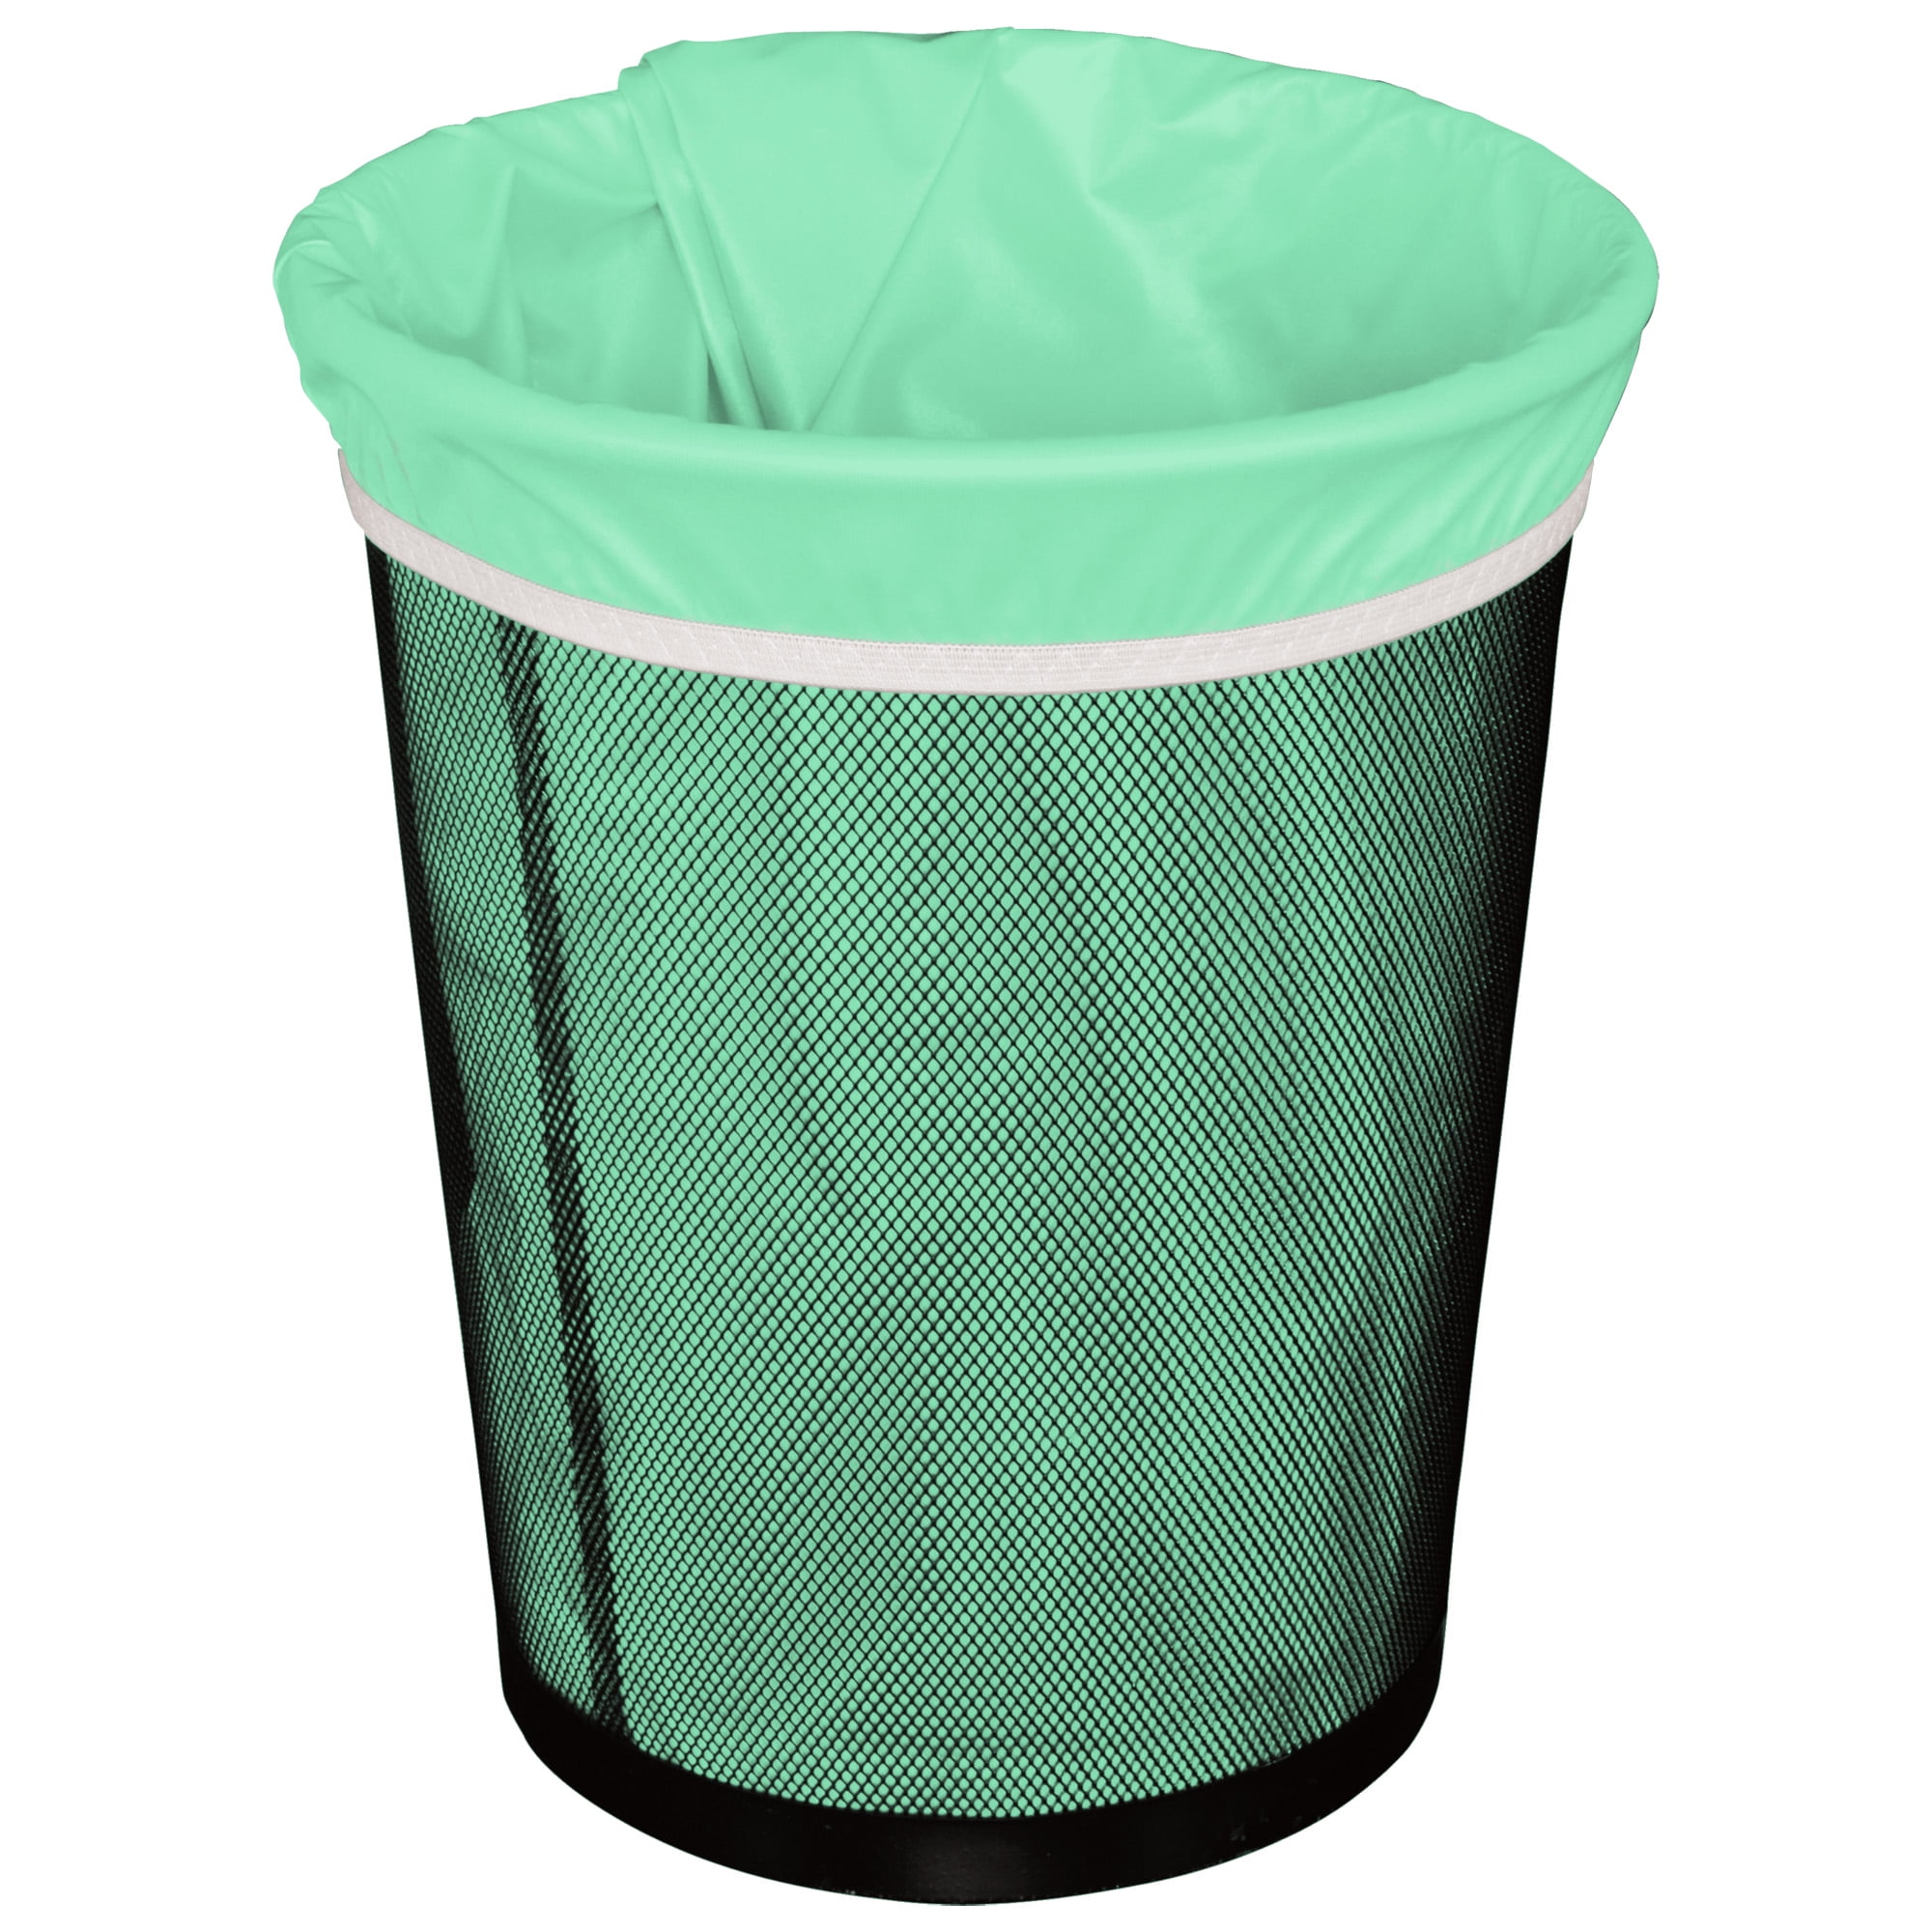 Planet Wise Reusable Trash Bag, Green